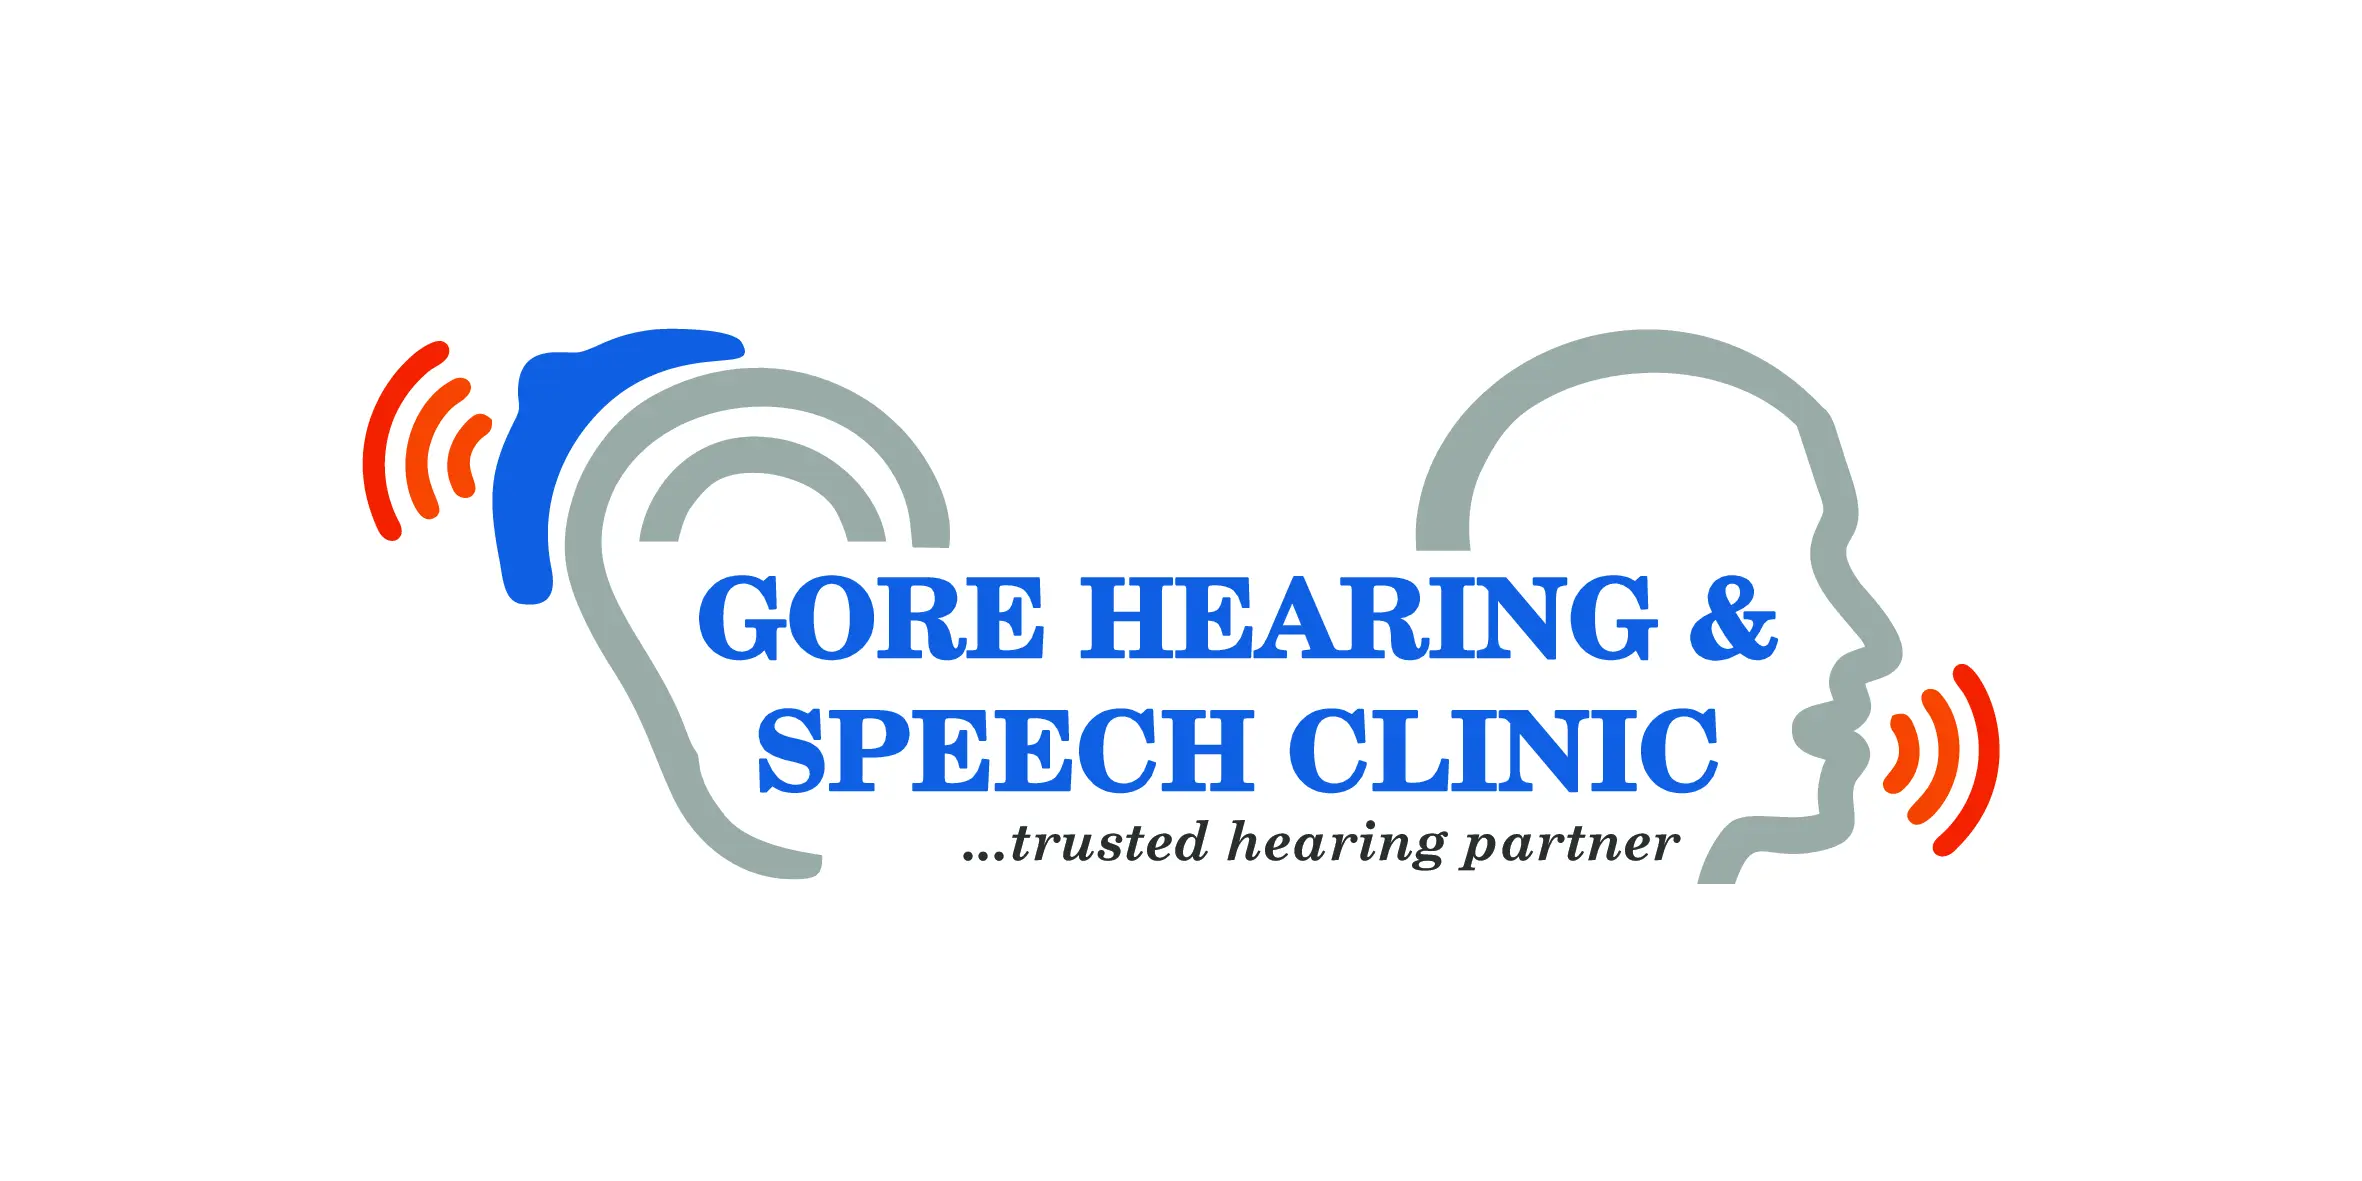 hearing aids in pune Logo